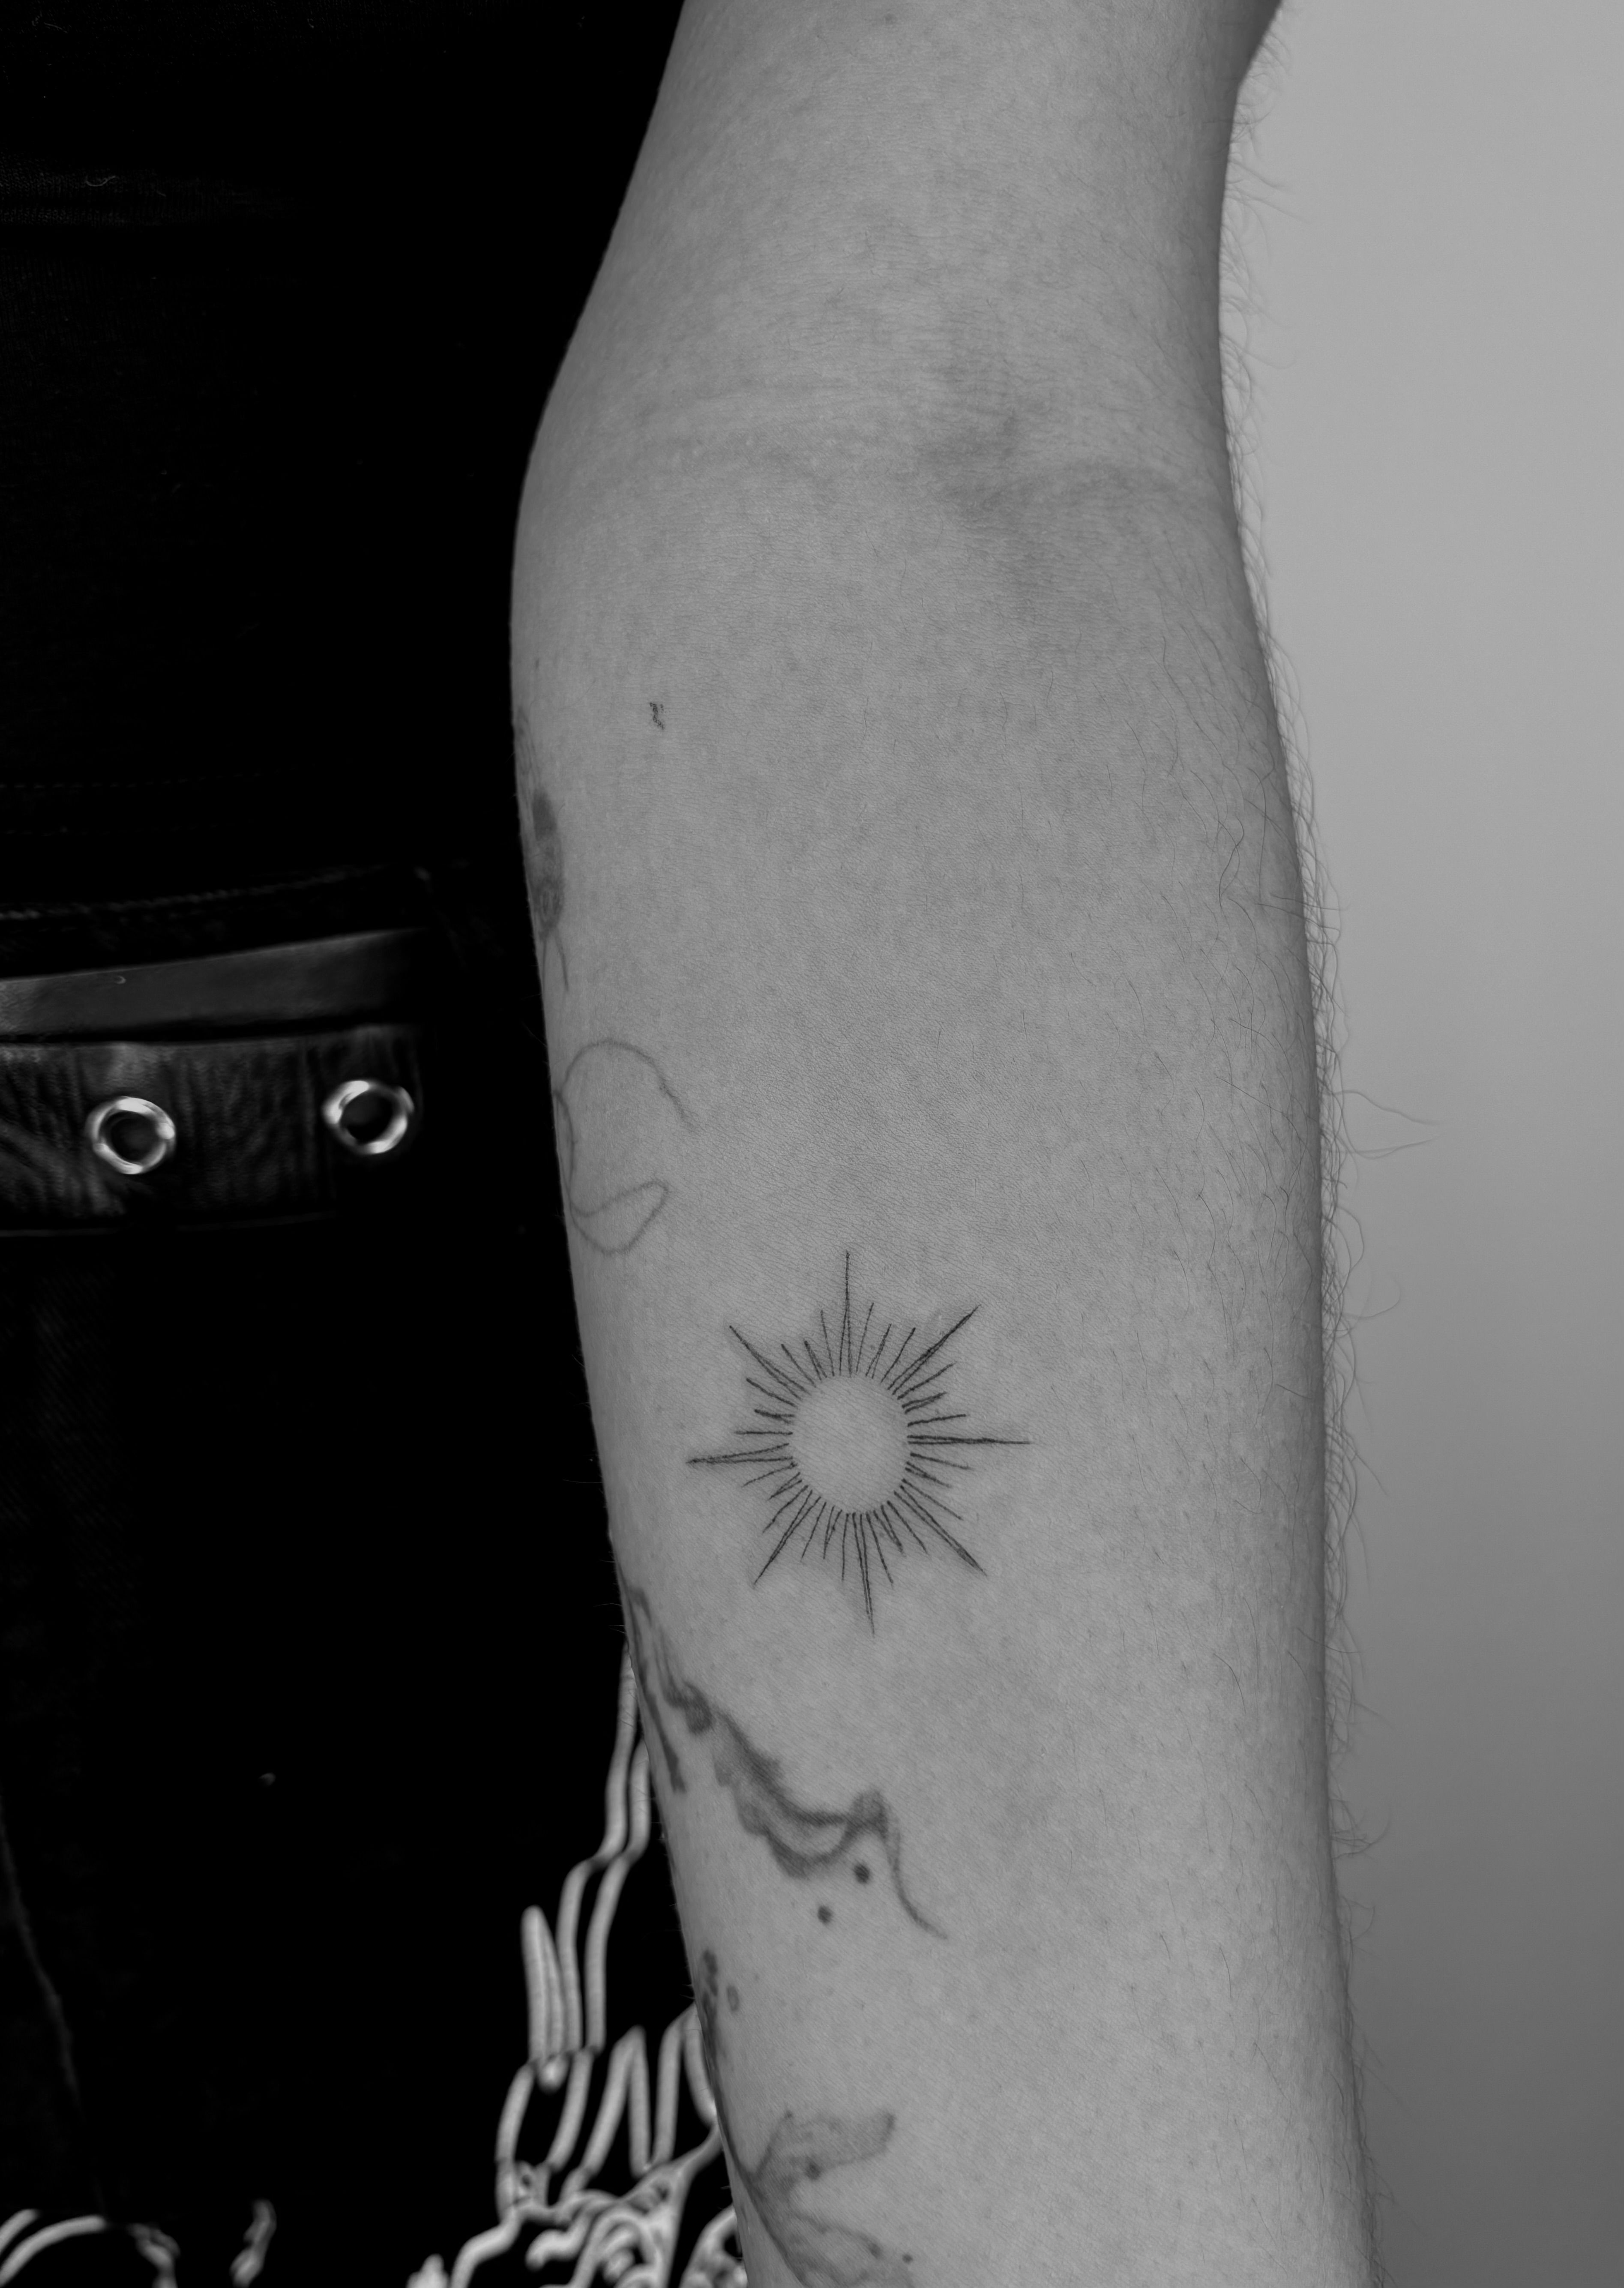 Water Transfer Tattoo Minimalist Small Sun Moon Tattoo Body Art Waterproof  Temporary Fake Tattoo For Man Woman Kid 10.5*6cm From Soapsane, $8.13 |  DHgate.Com